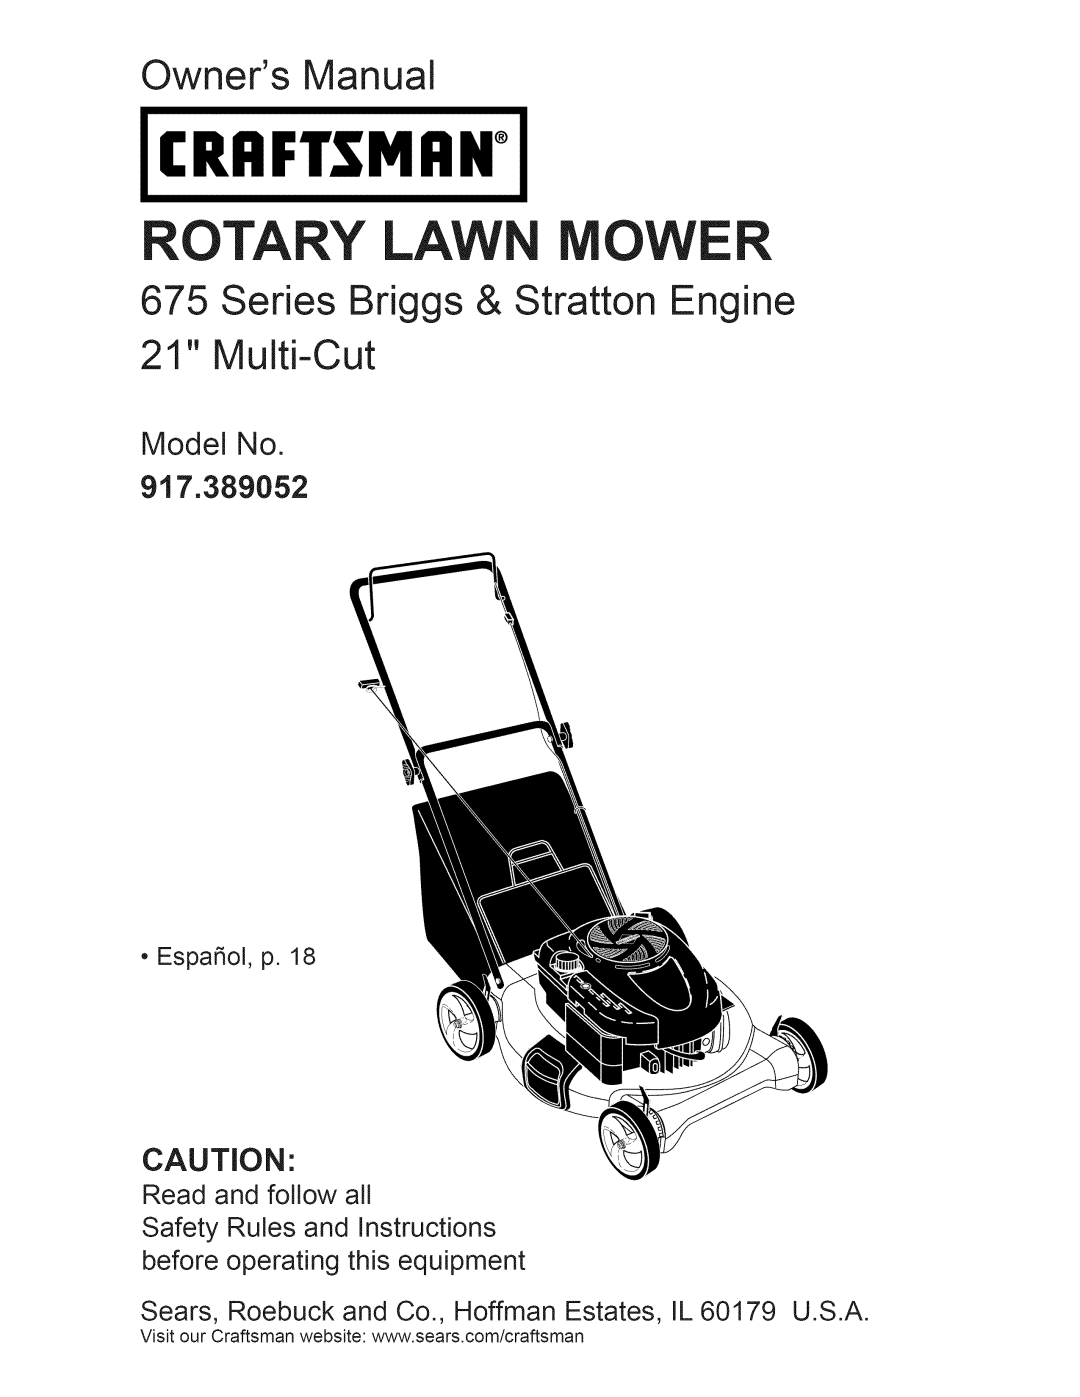 Craftsman owner manual Model No 917.389052, Craftsman, Rotary Lawn Mower, Owners Manual 